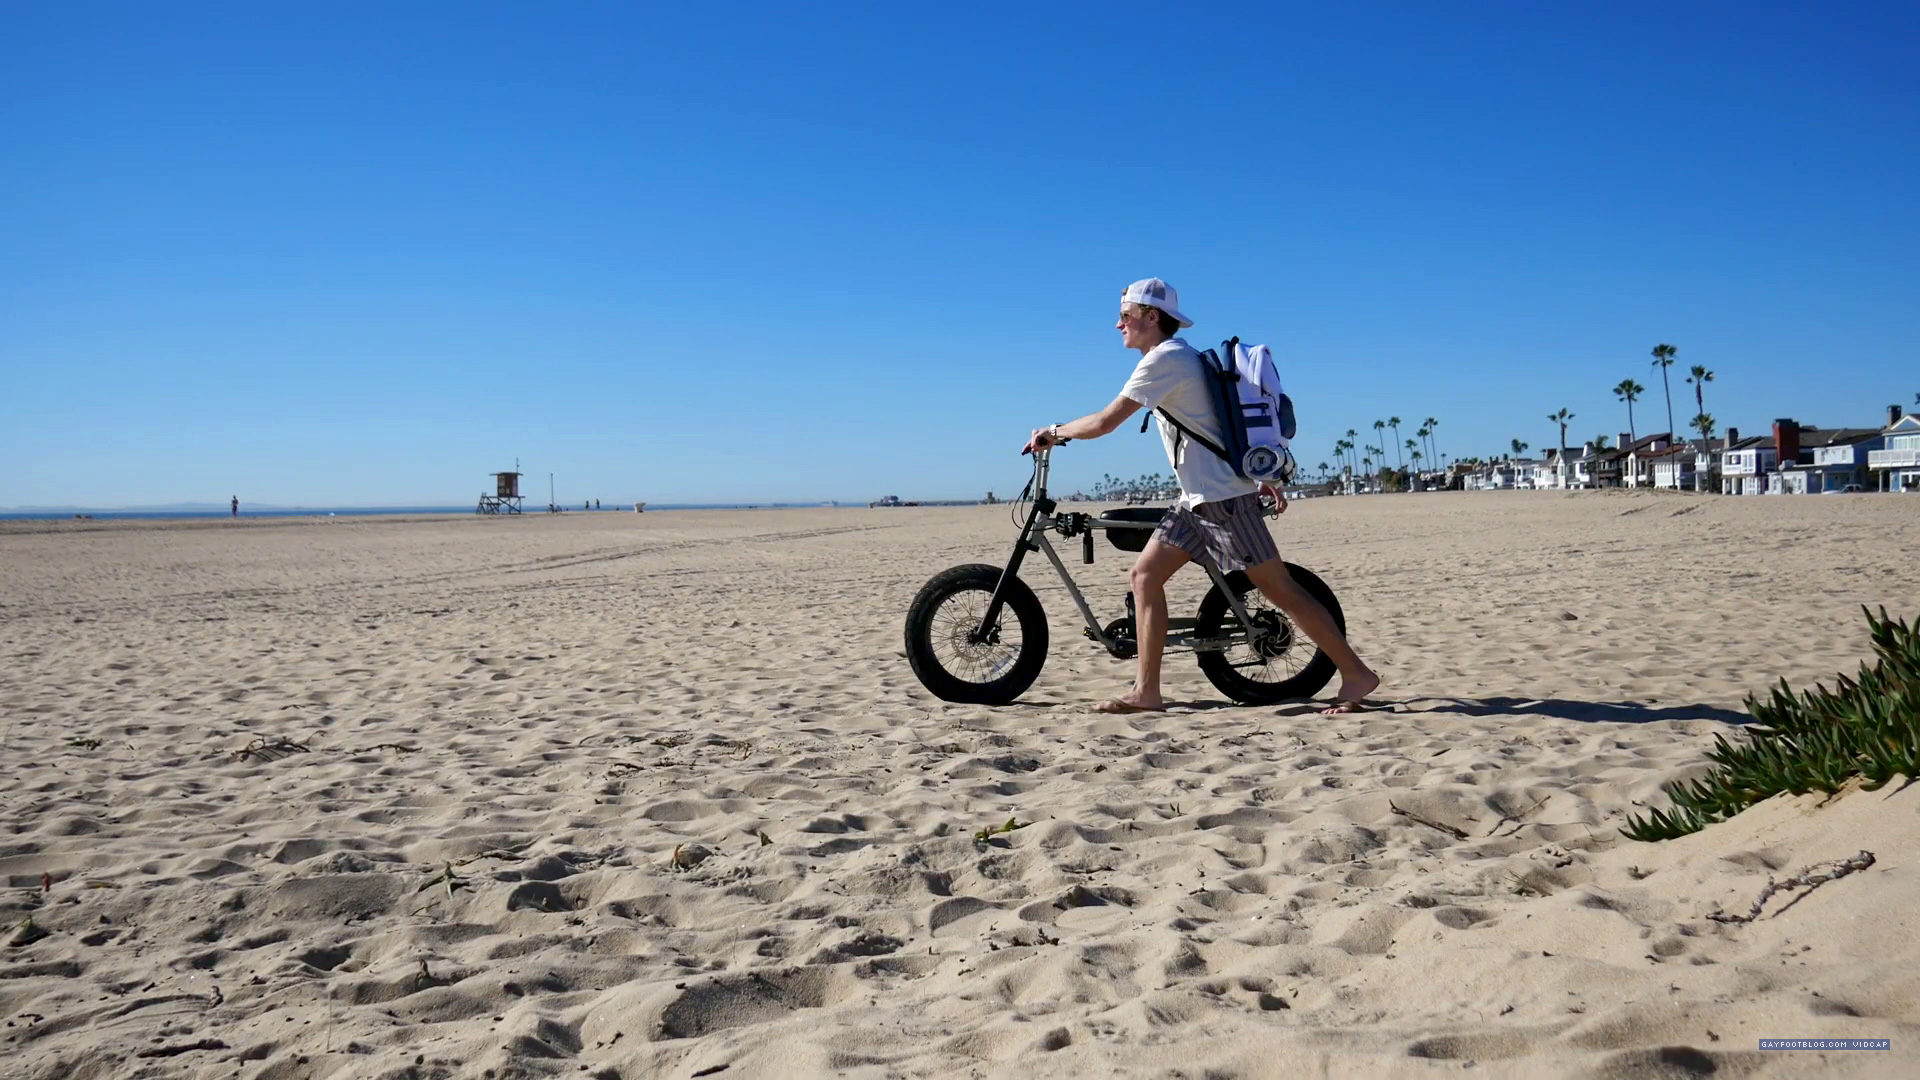 driving his bike to the beach